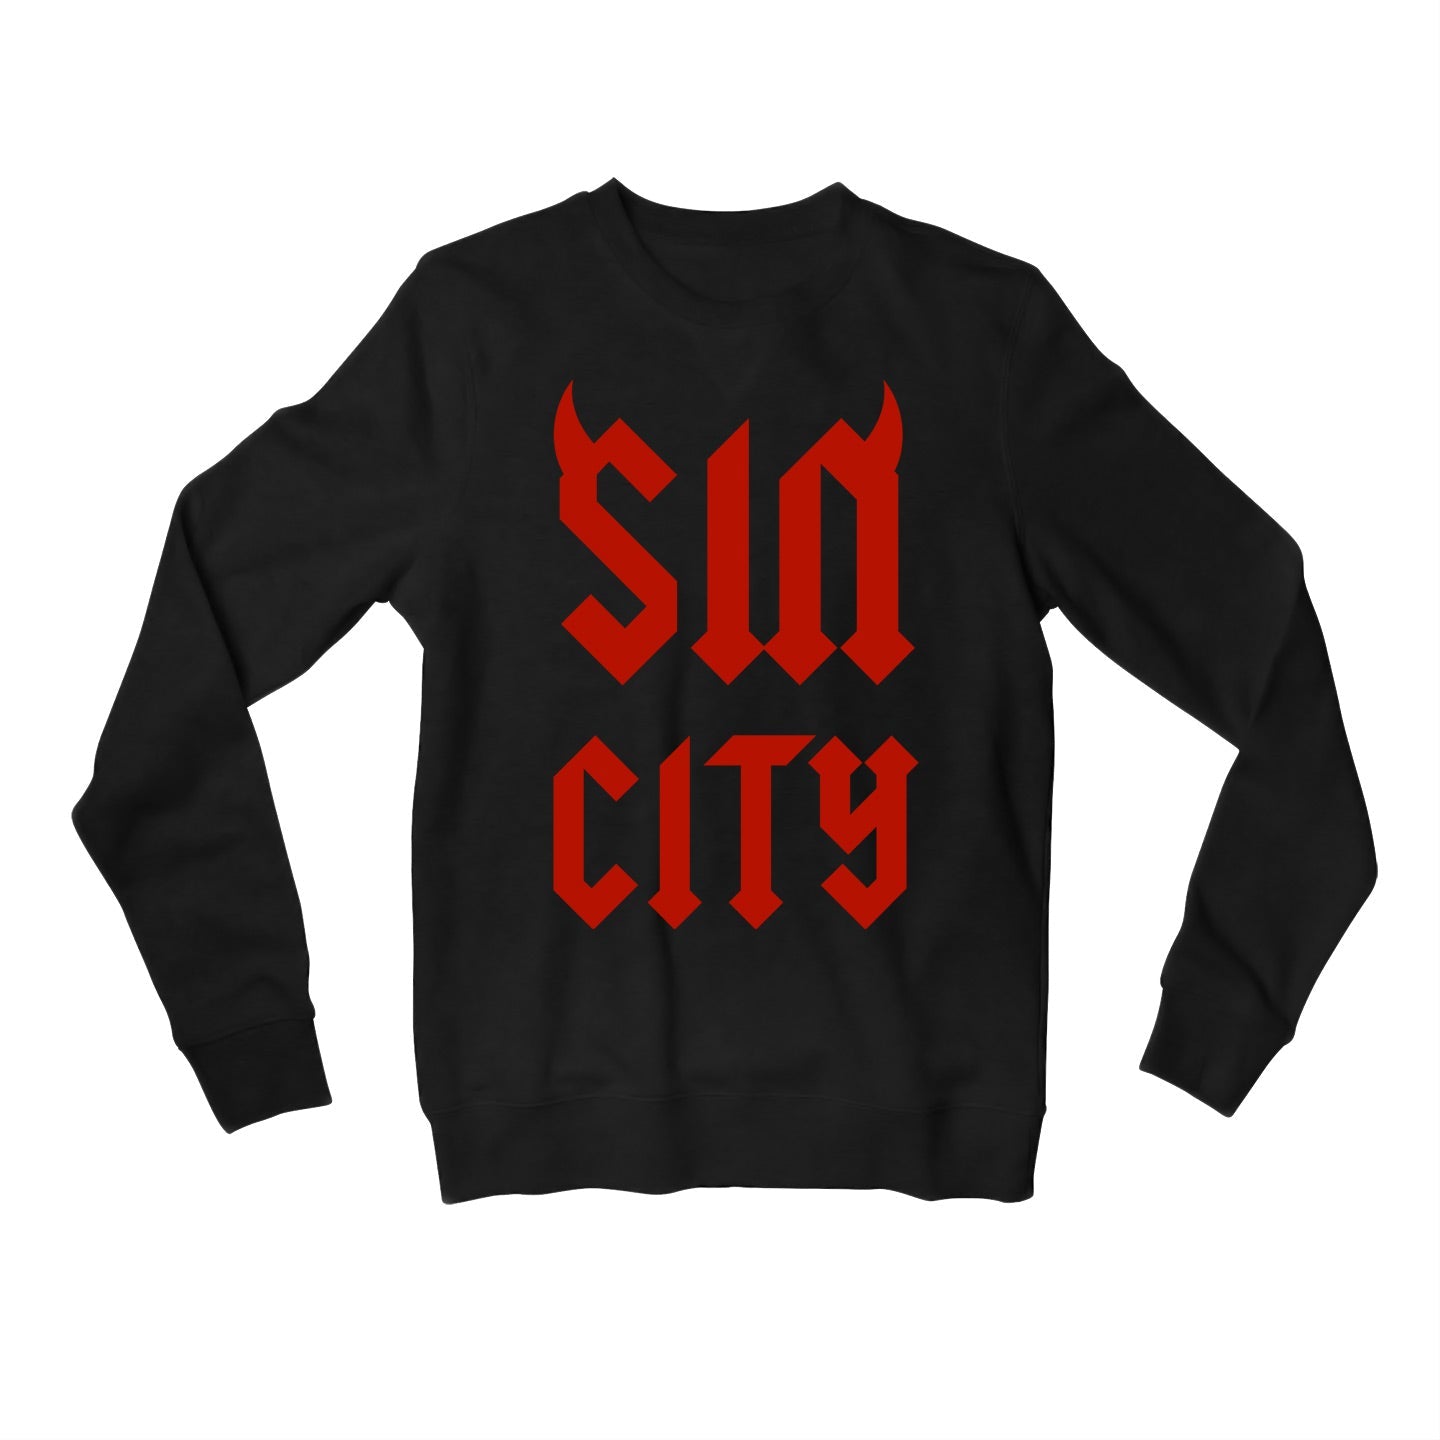 ac/dc sin city sweatshirt upper winterwear music band buy online india the banyan tee tbt men women girls boys unisex black